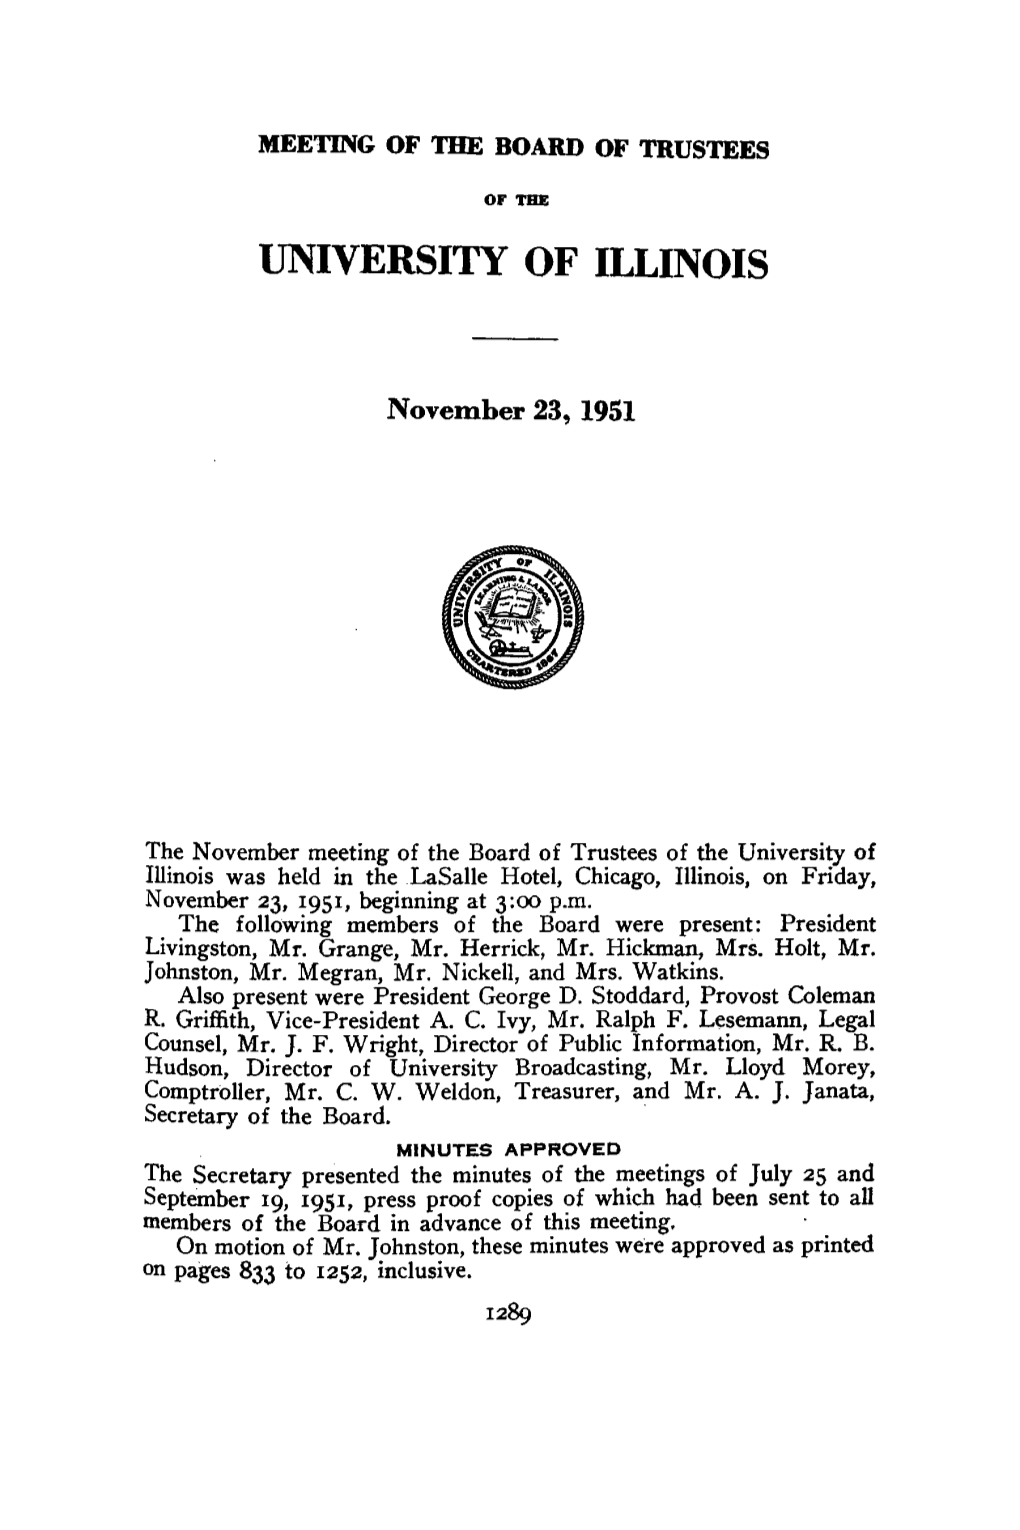 November 23, 1951, Minutes | UI Board of Trustees